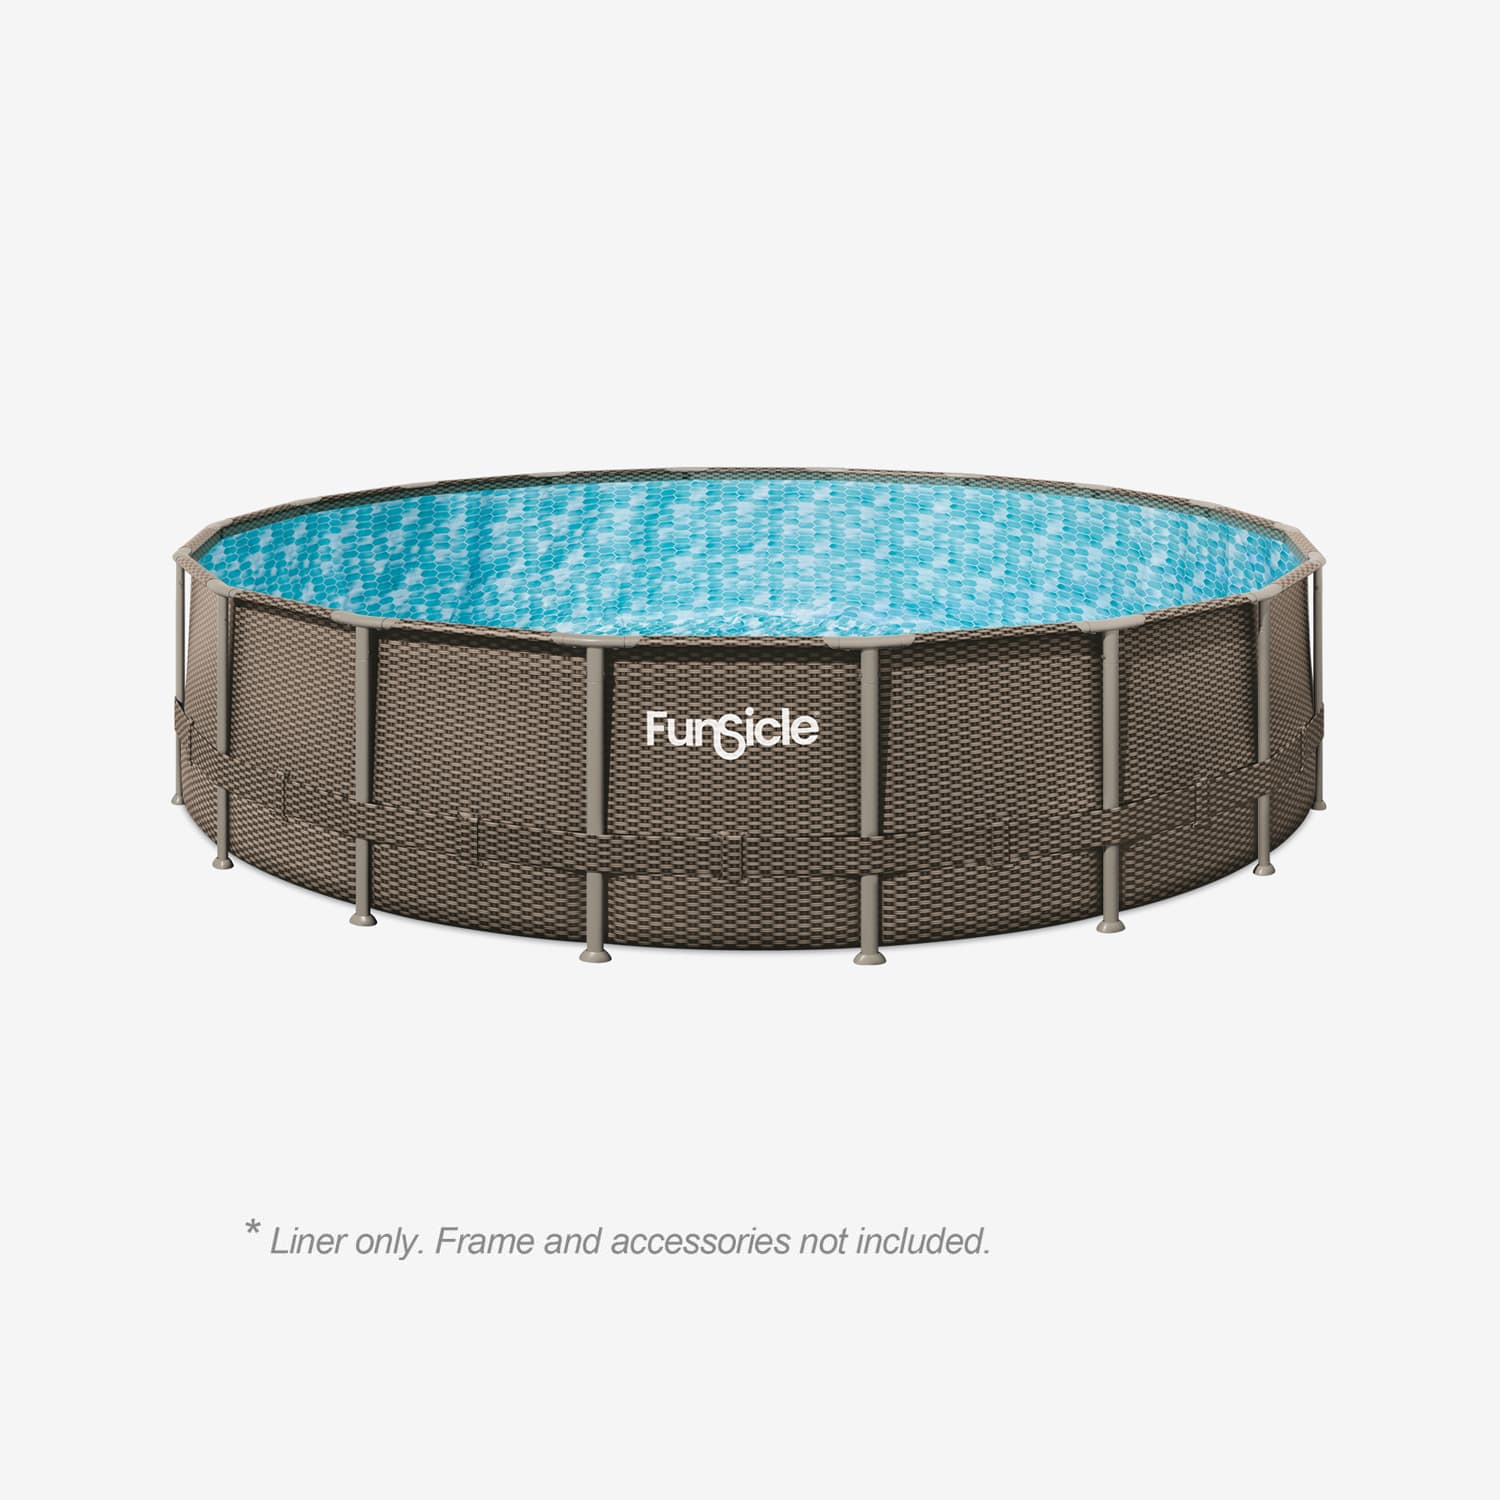 Funsicle 20 ft Oasis Designer Pool Liner – Dark Double Rattan